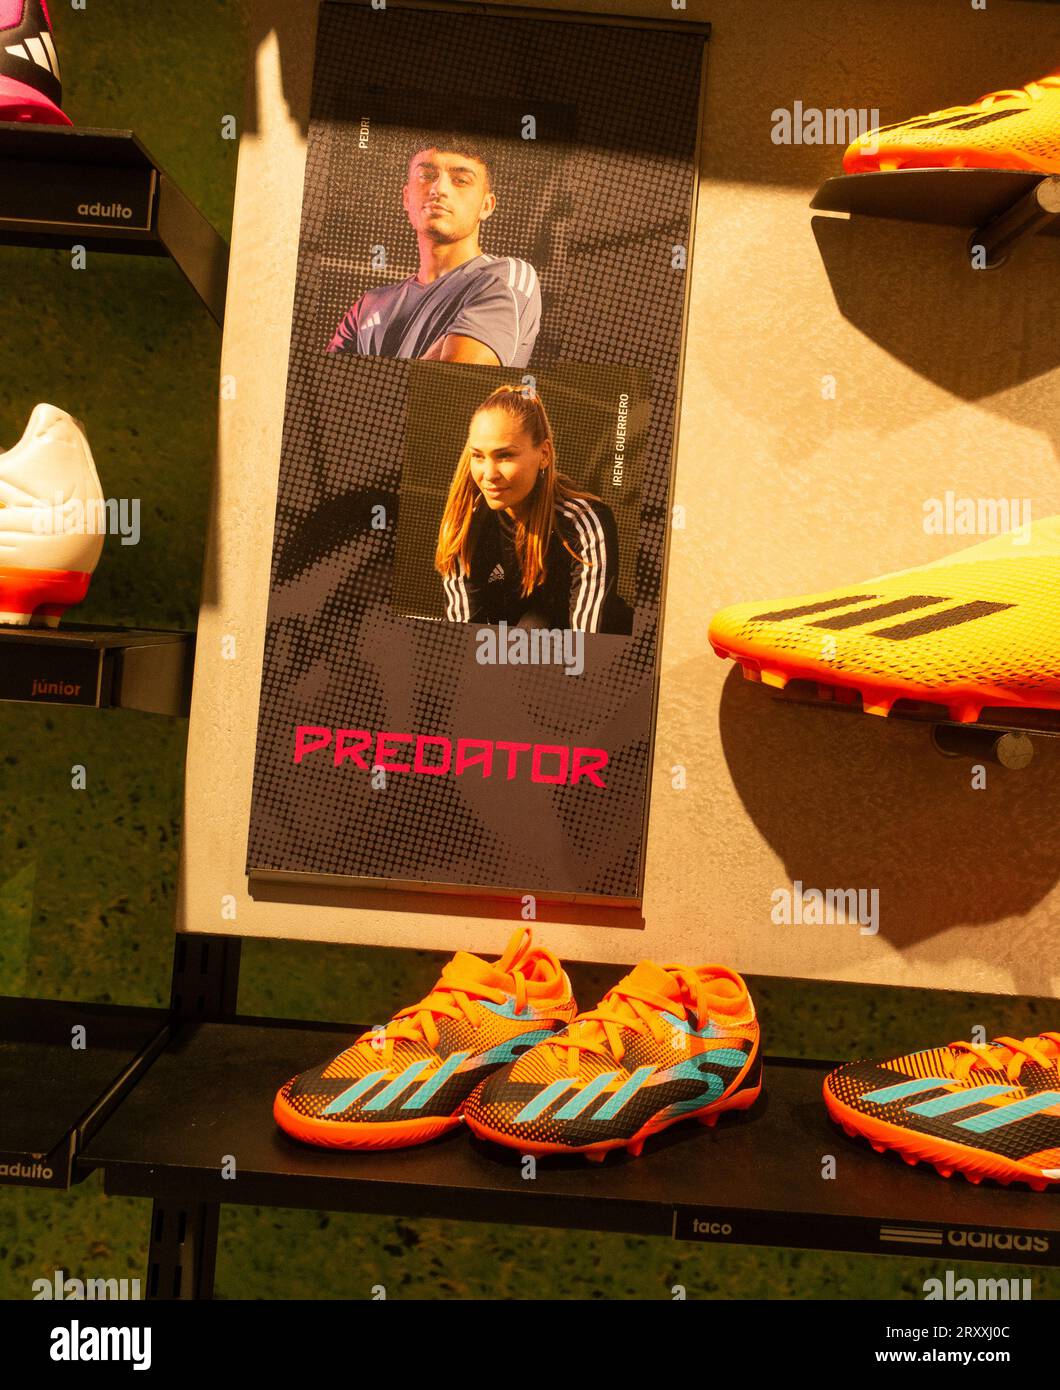 Adidas Predator football boots store display featuring Spanish International footballer, Irene Guerrero Stock Photo